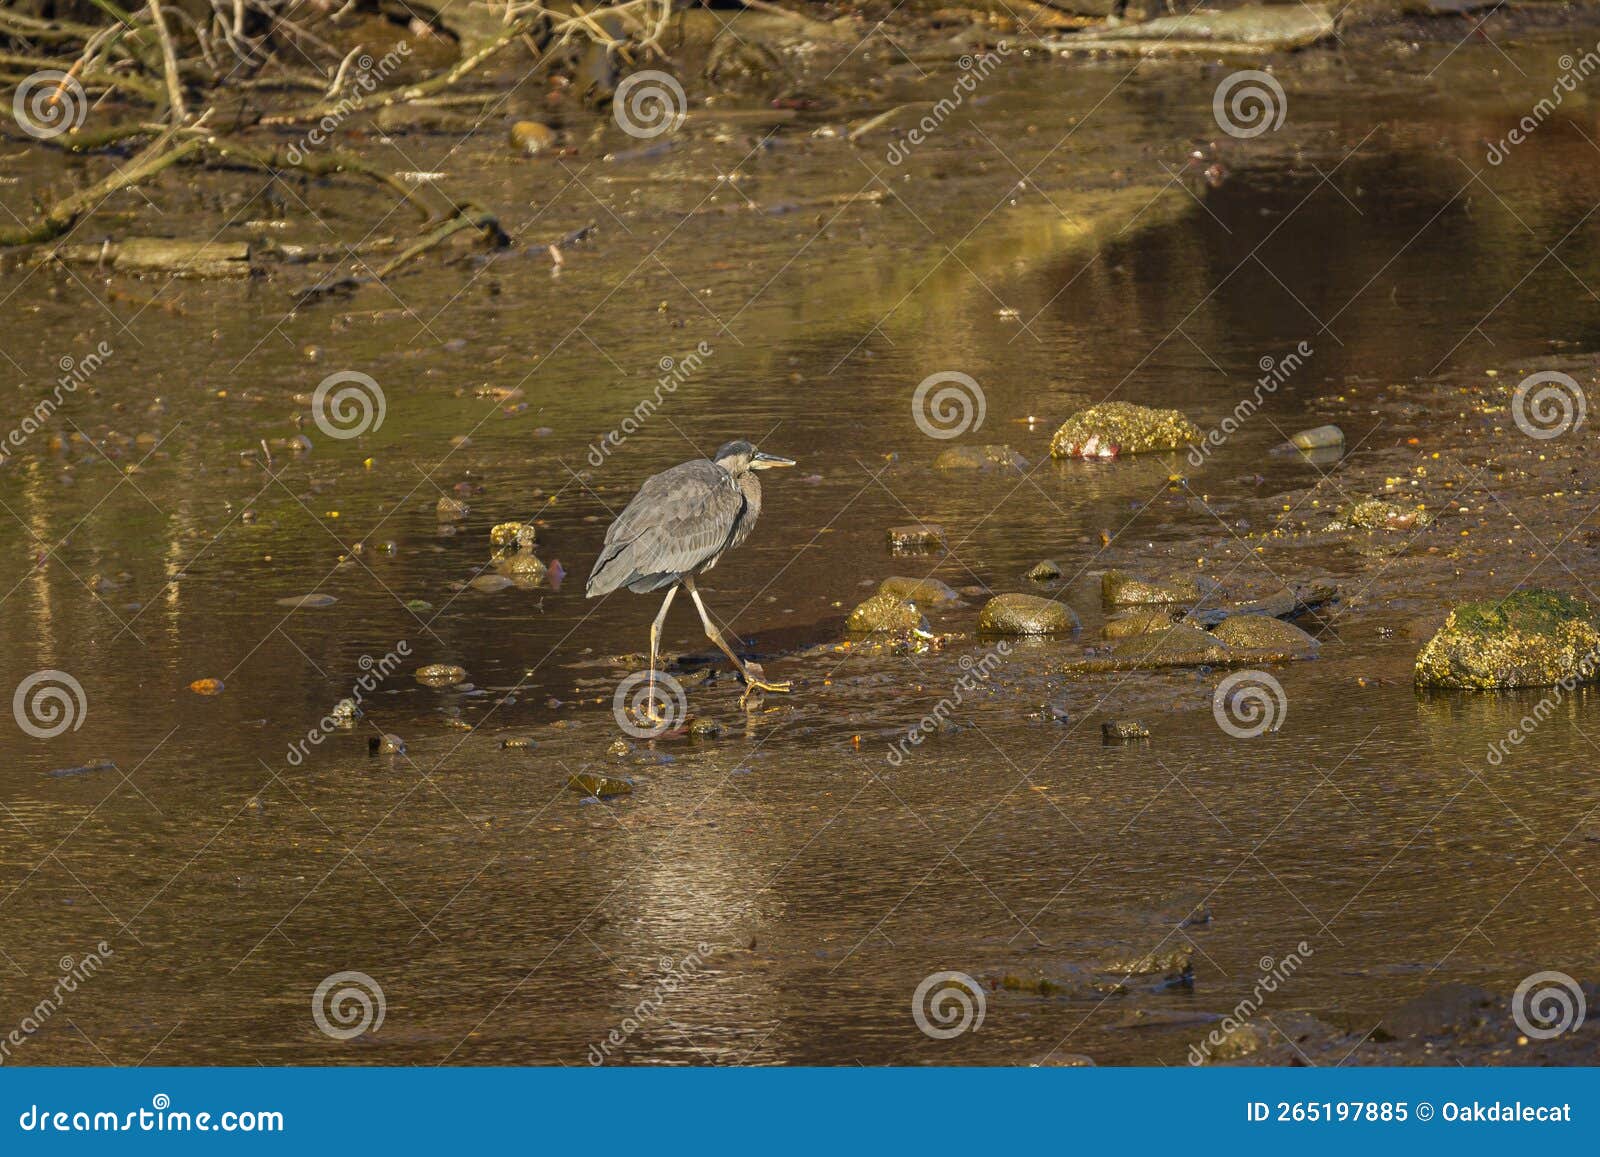 great blue heron walking through shallow stream